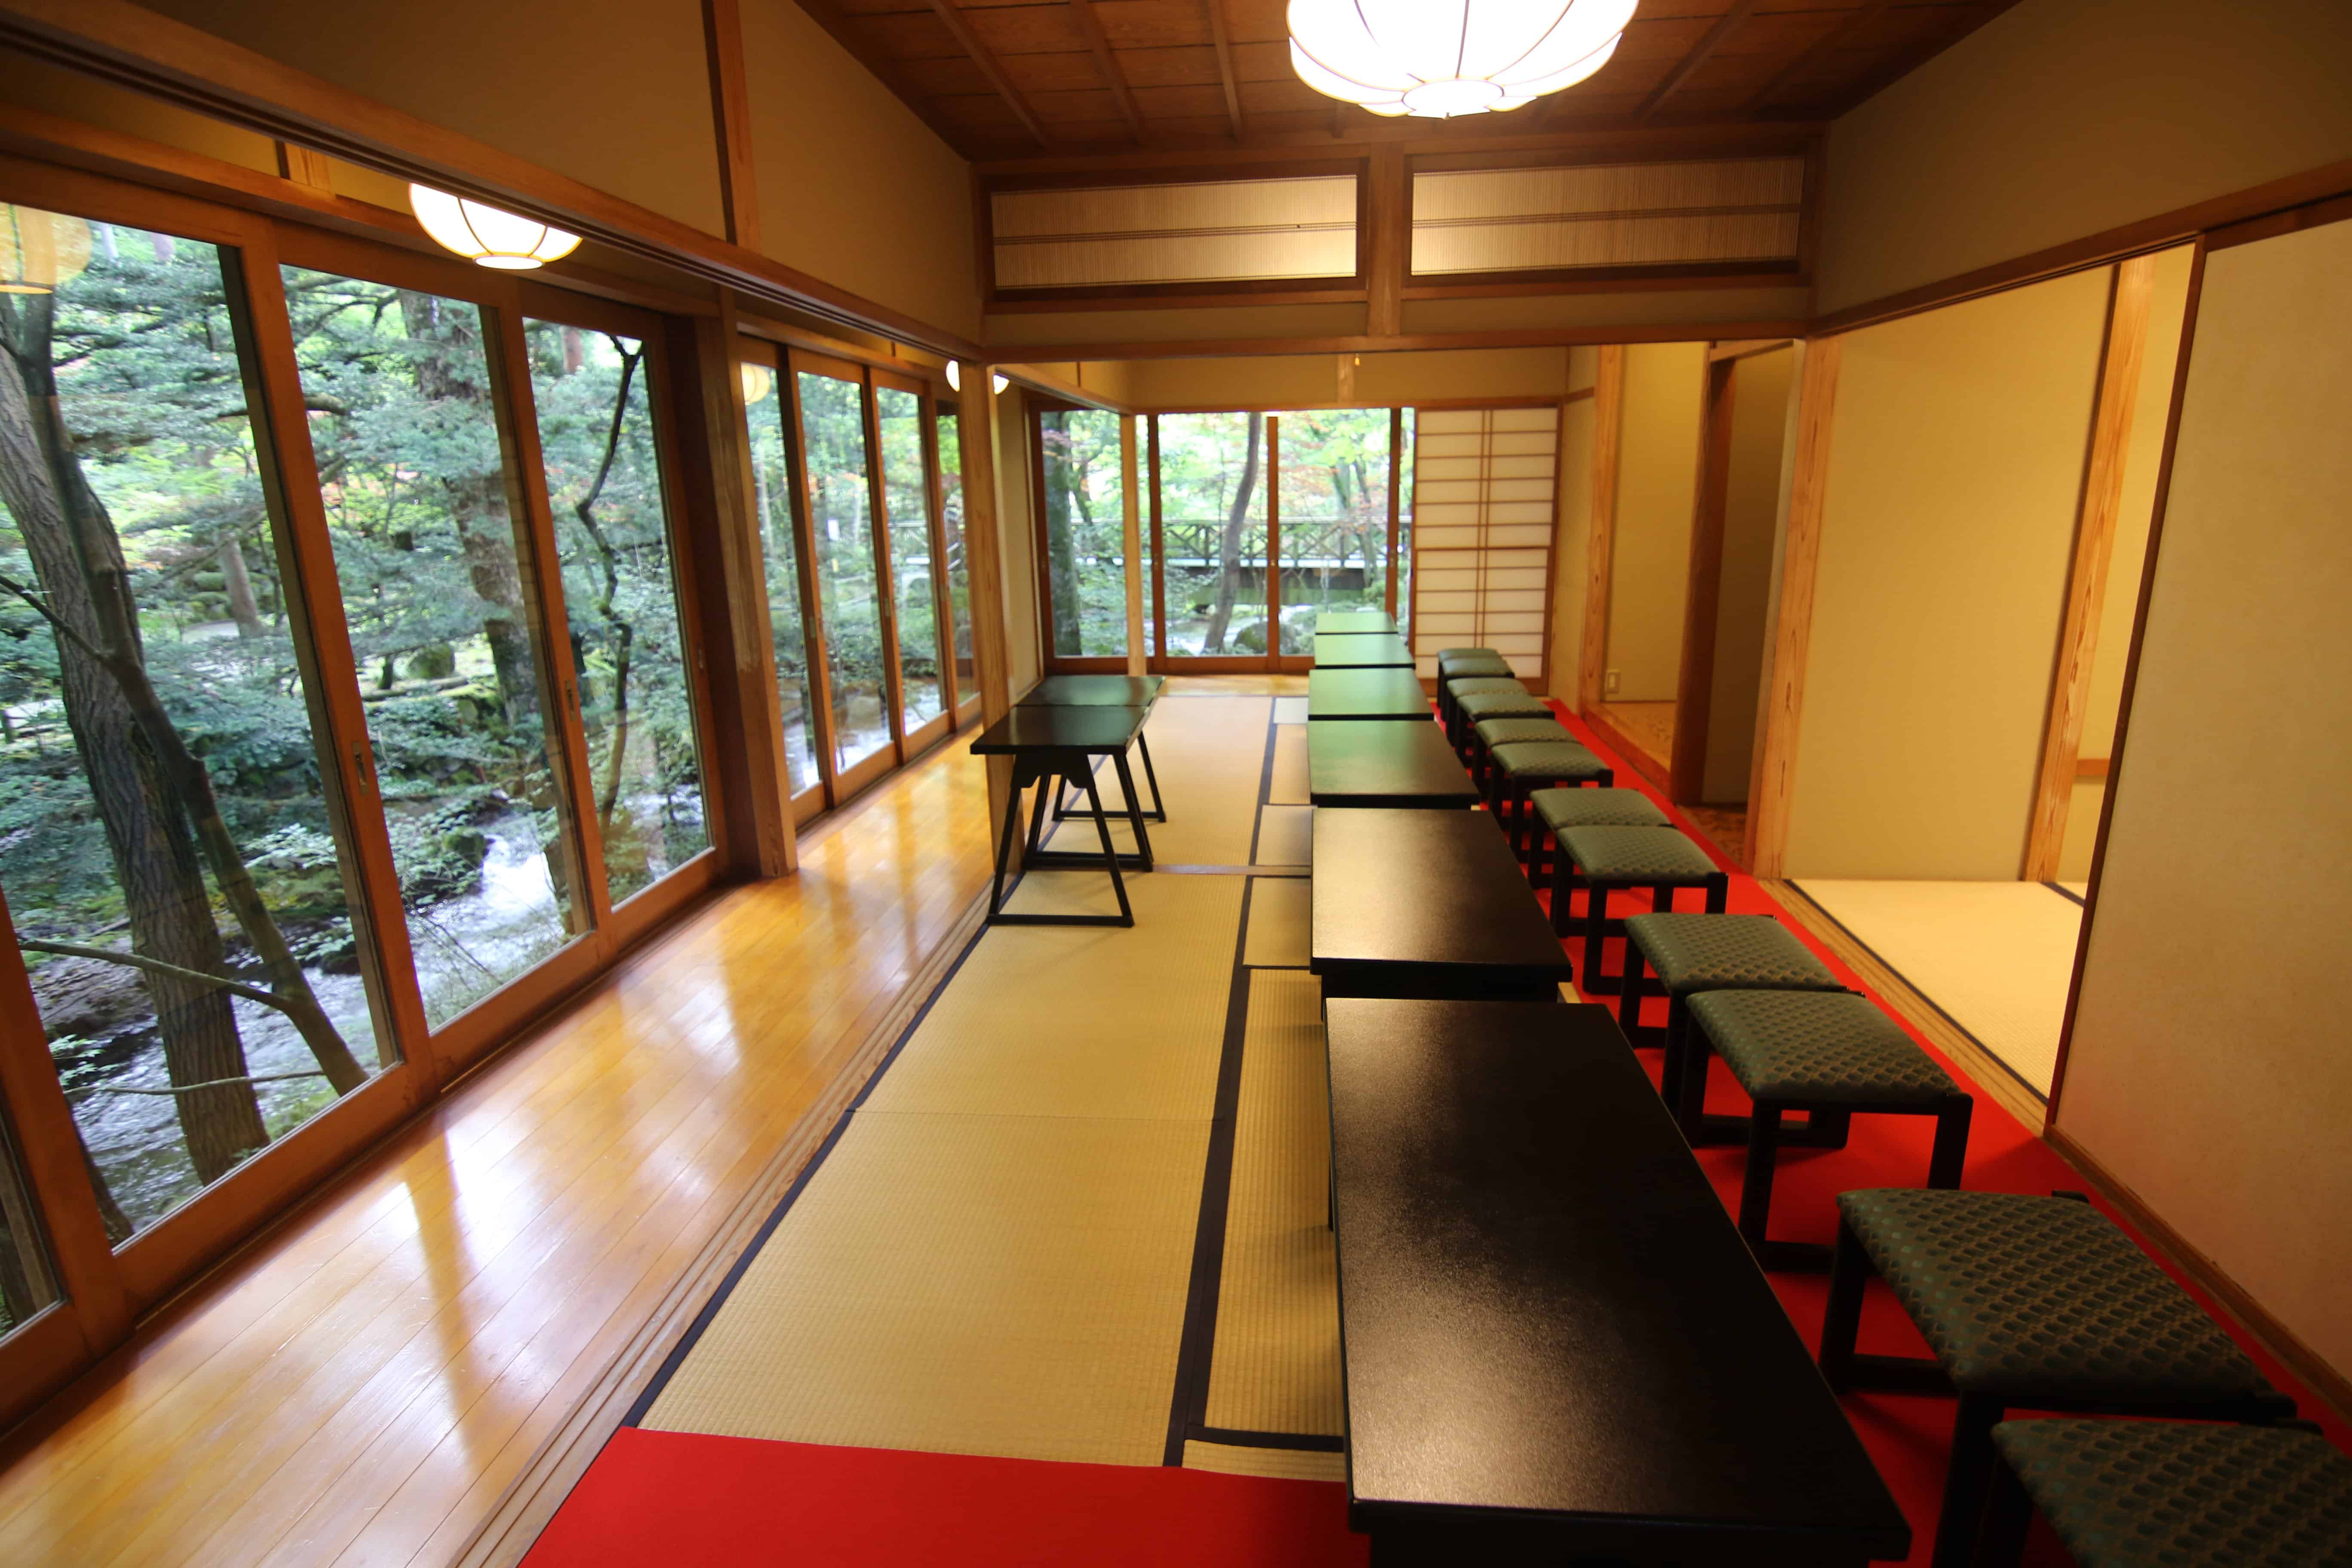 The tea room at Kaneyamaen Gardens